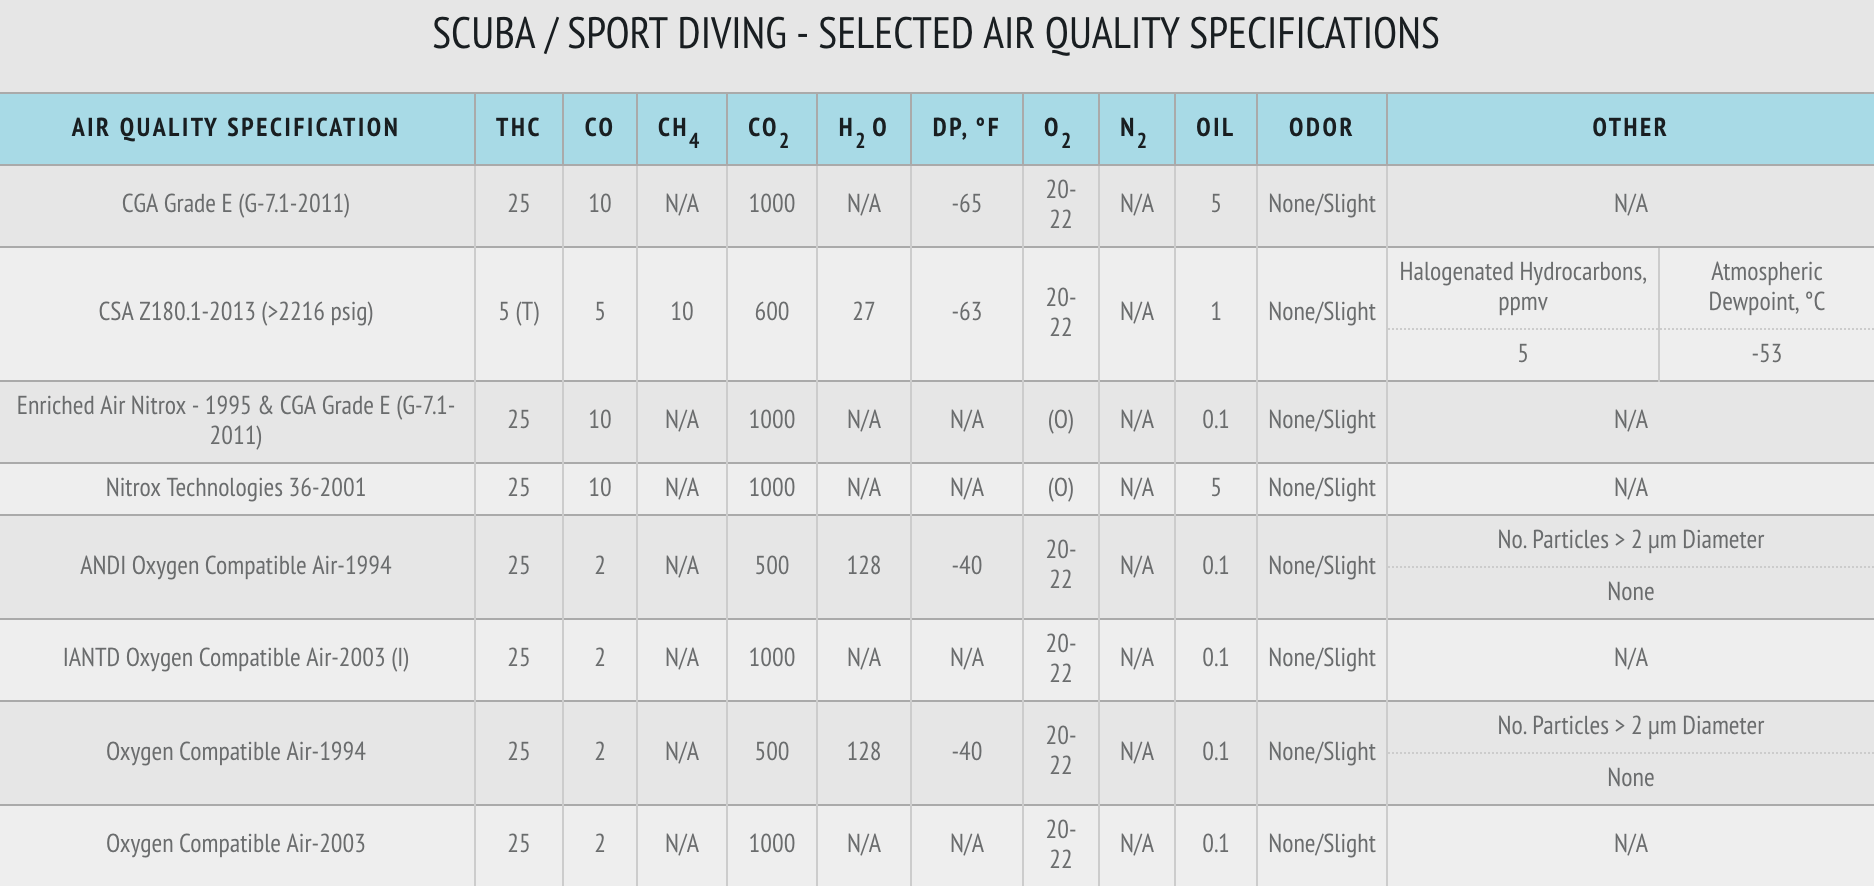 Scuba/Sport dive air quality specifications